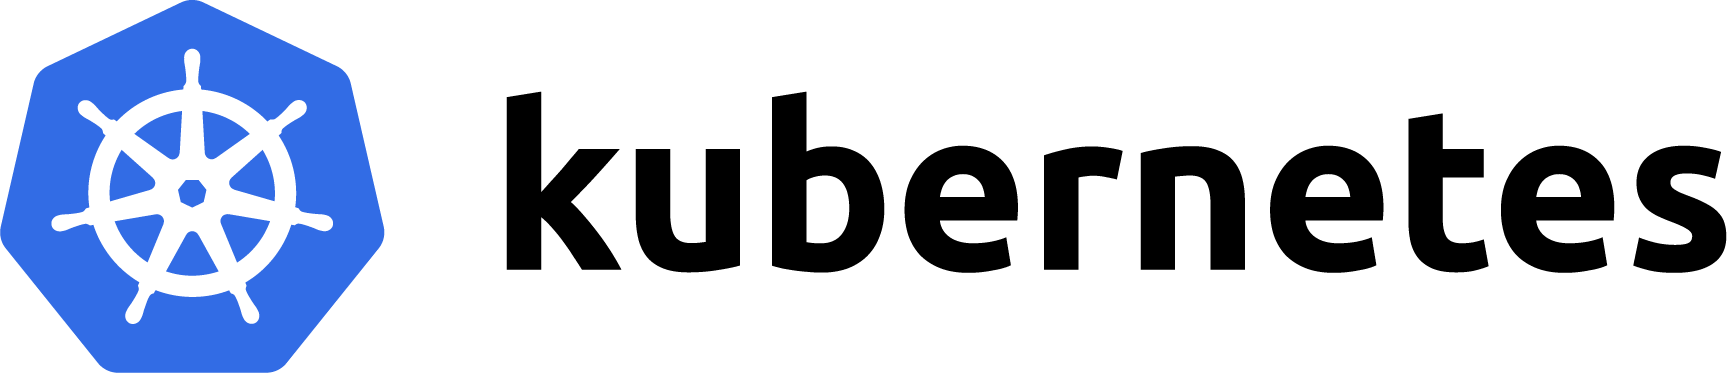 Official Kubernetes logo.